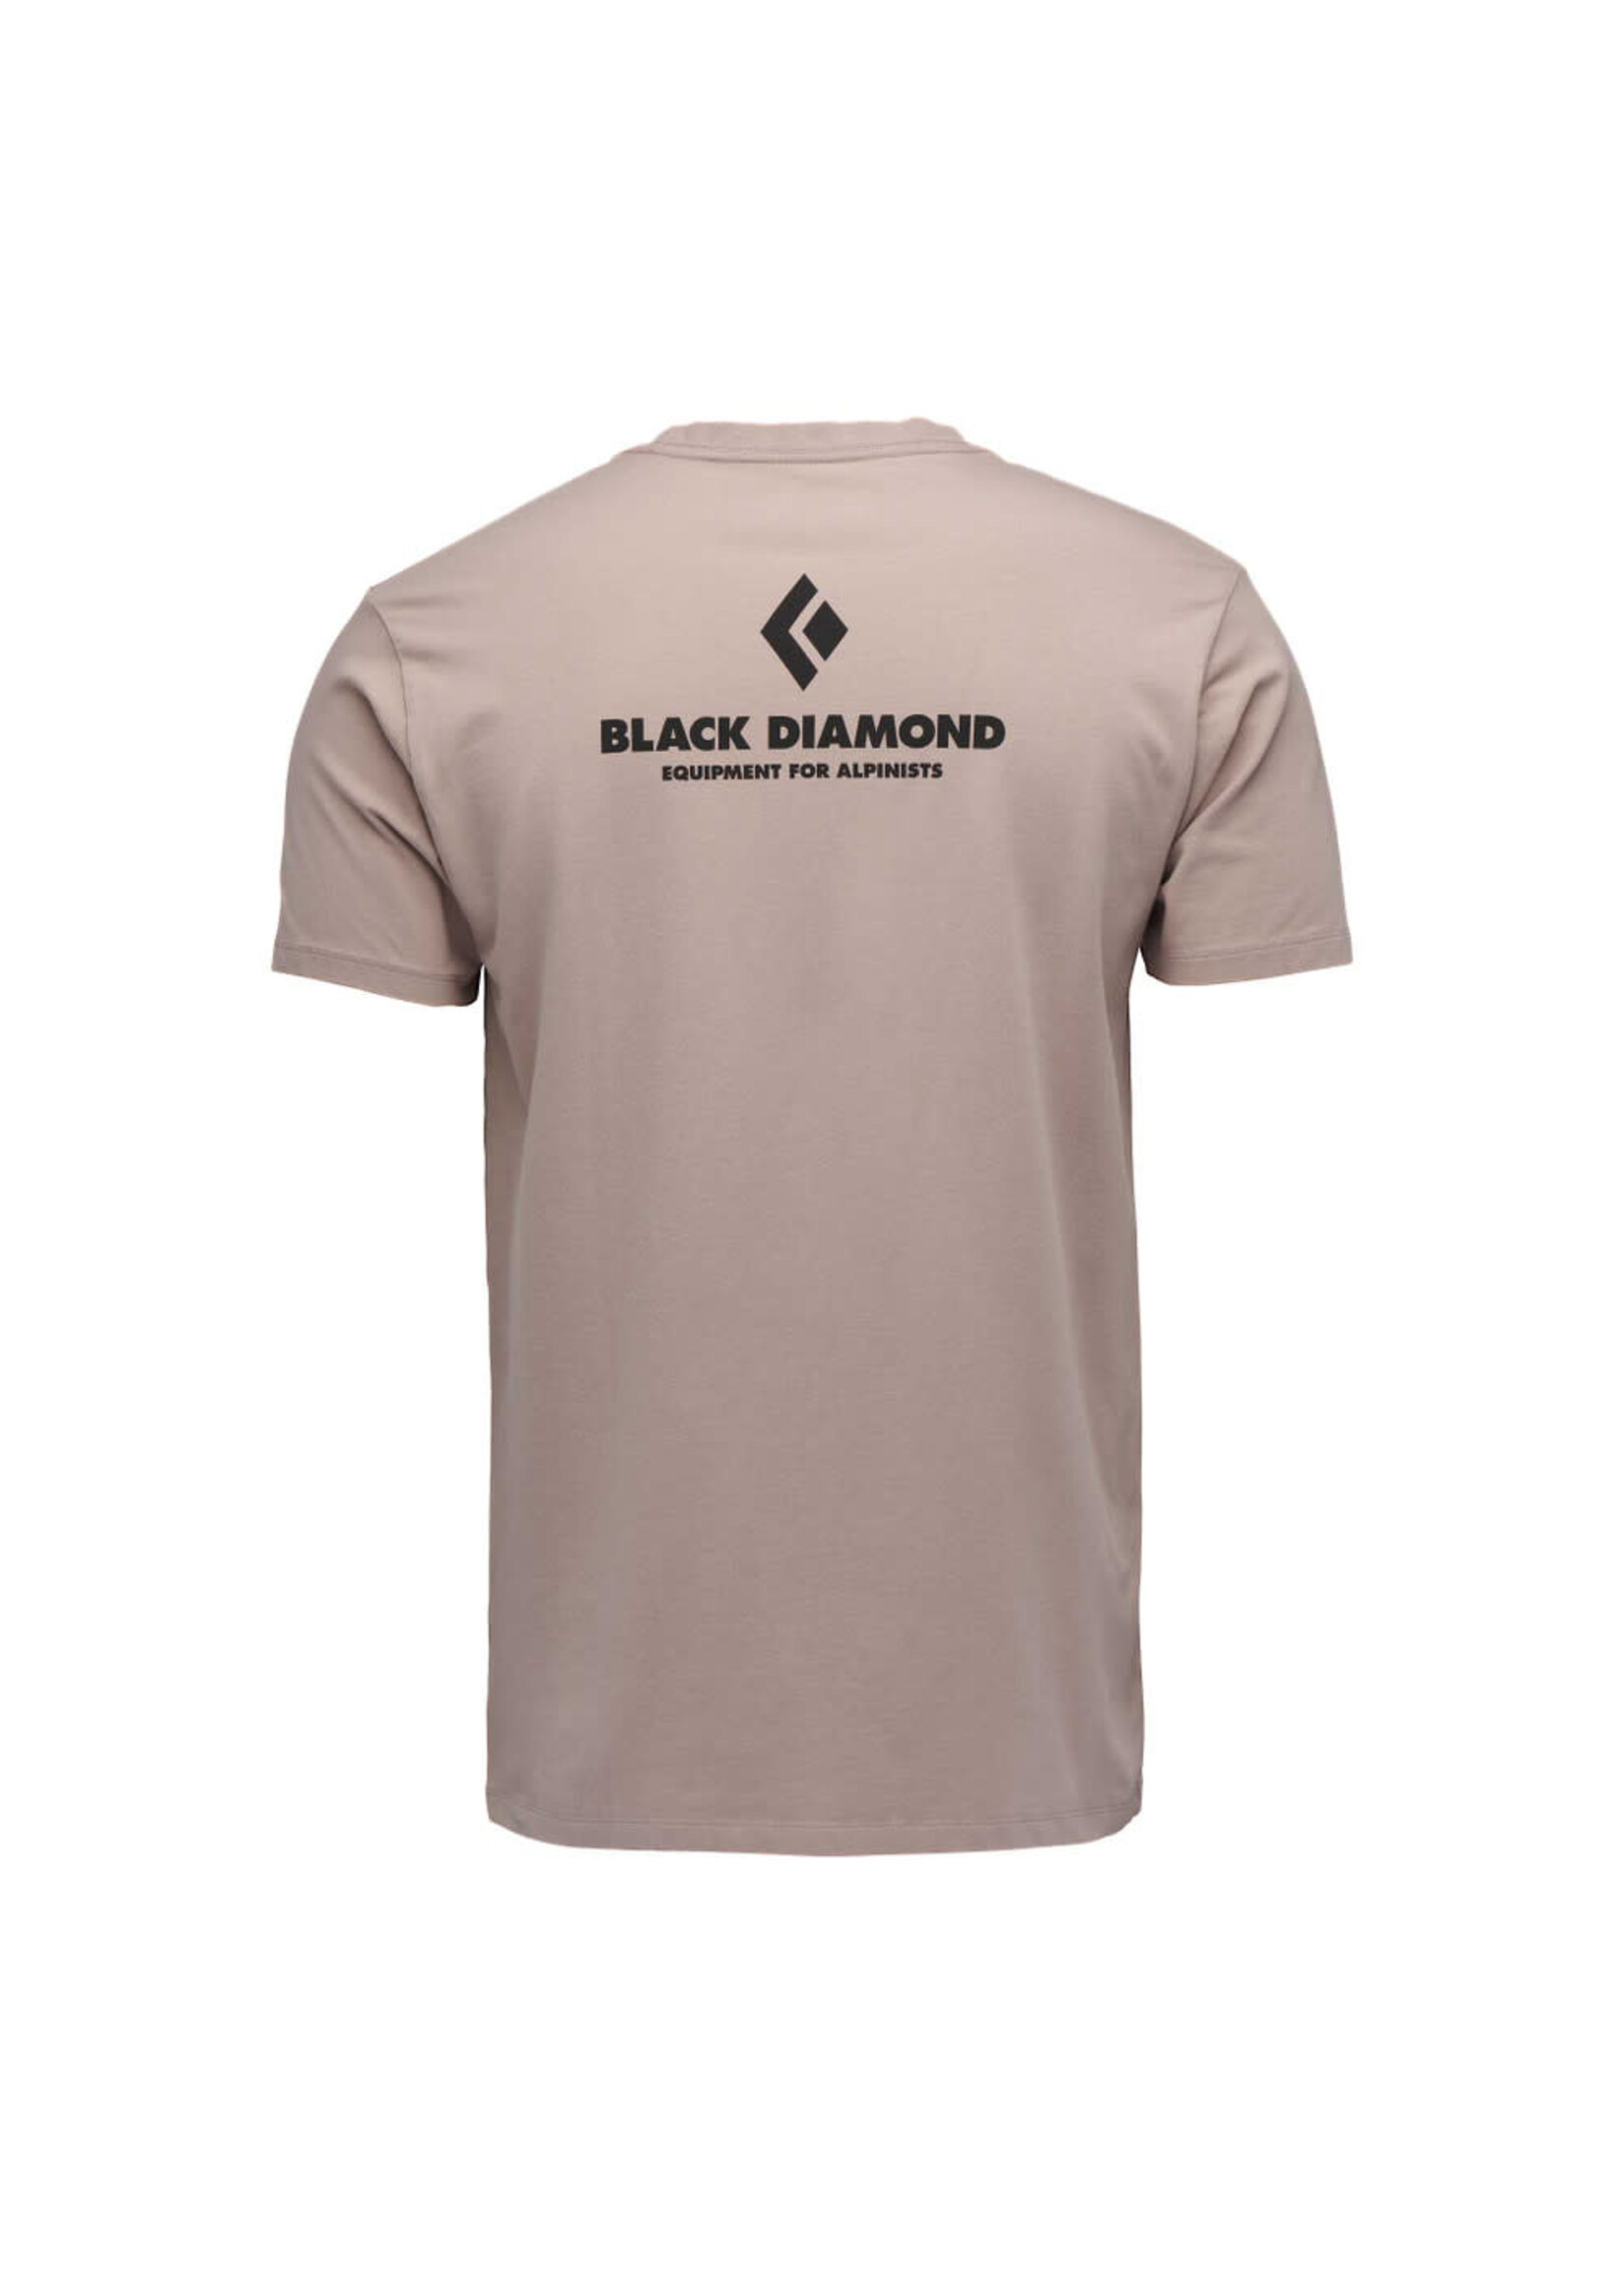 Black Diamond T-shirt Black Diamond Equipment for Alpinist